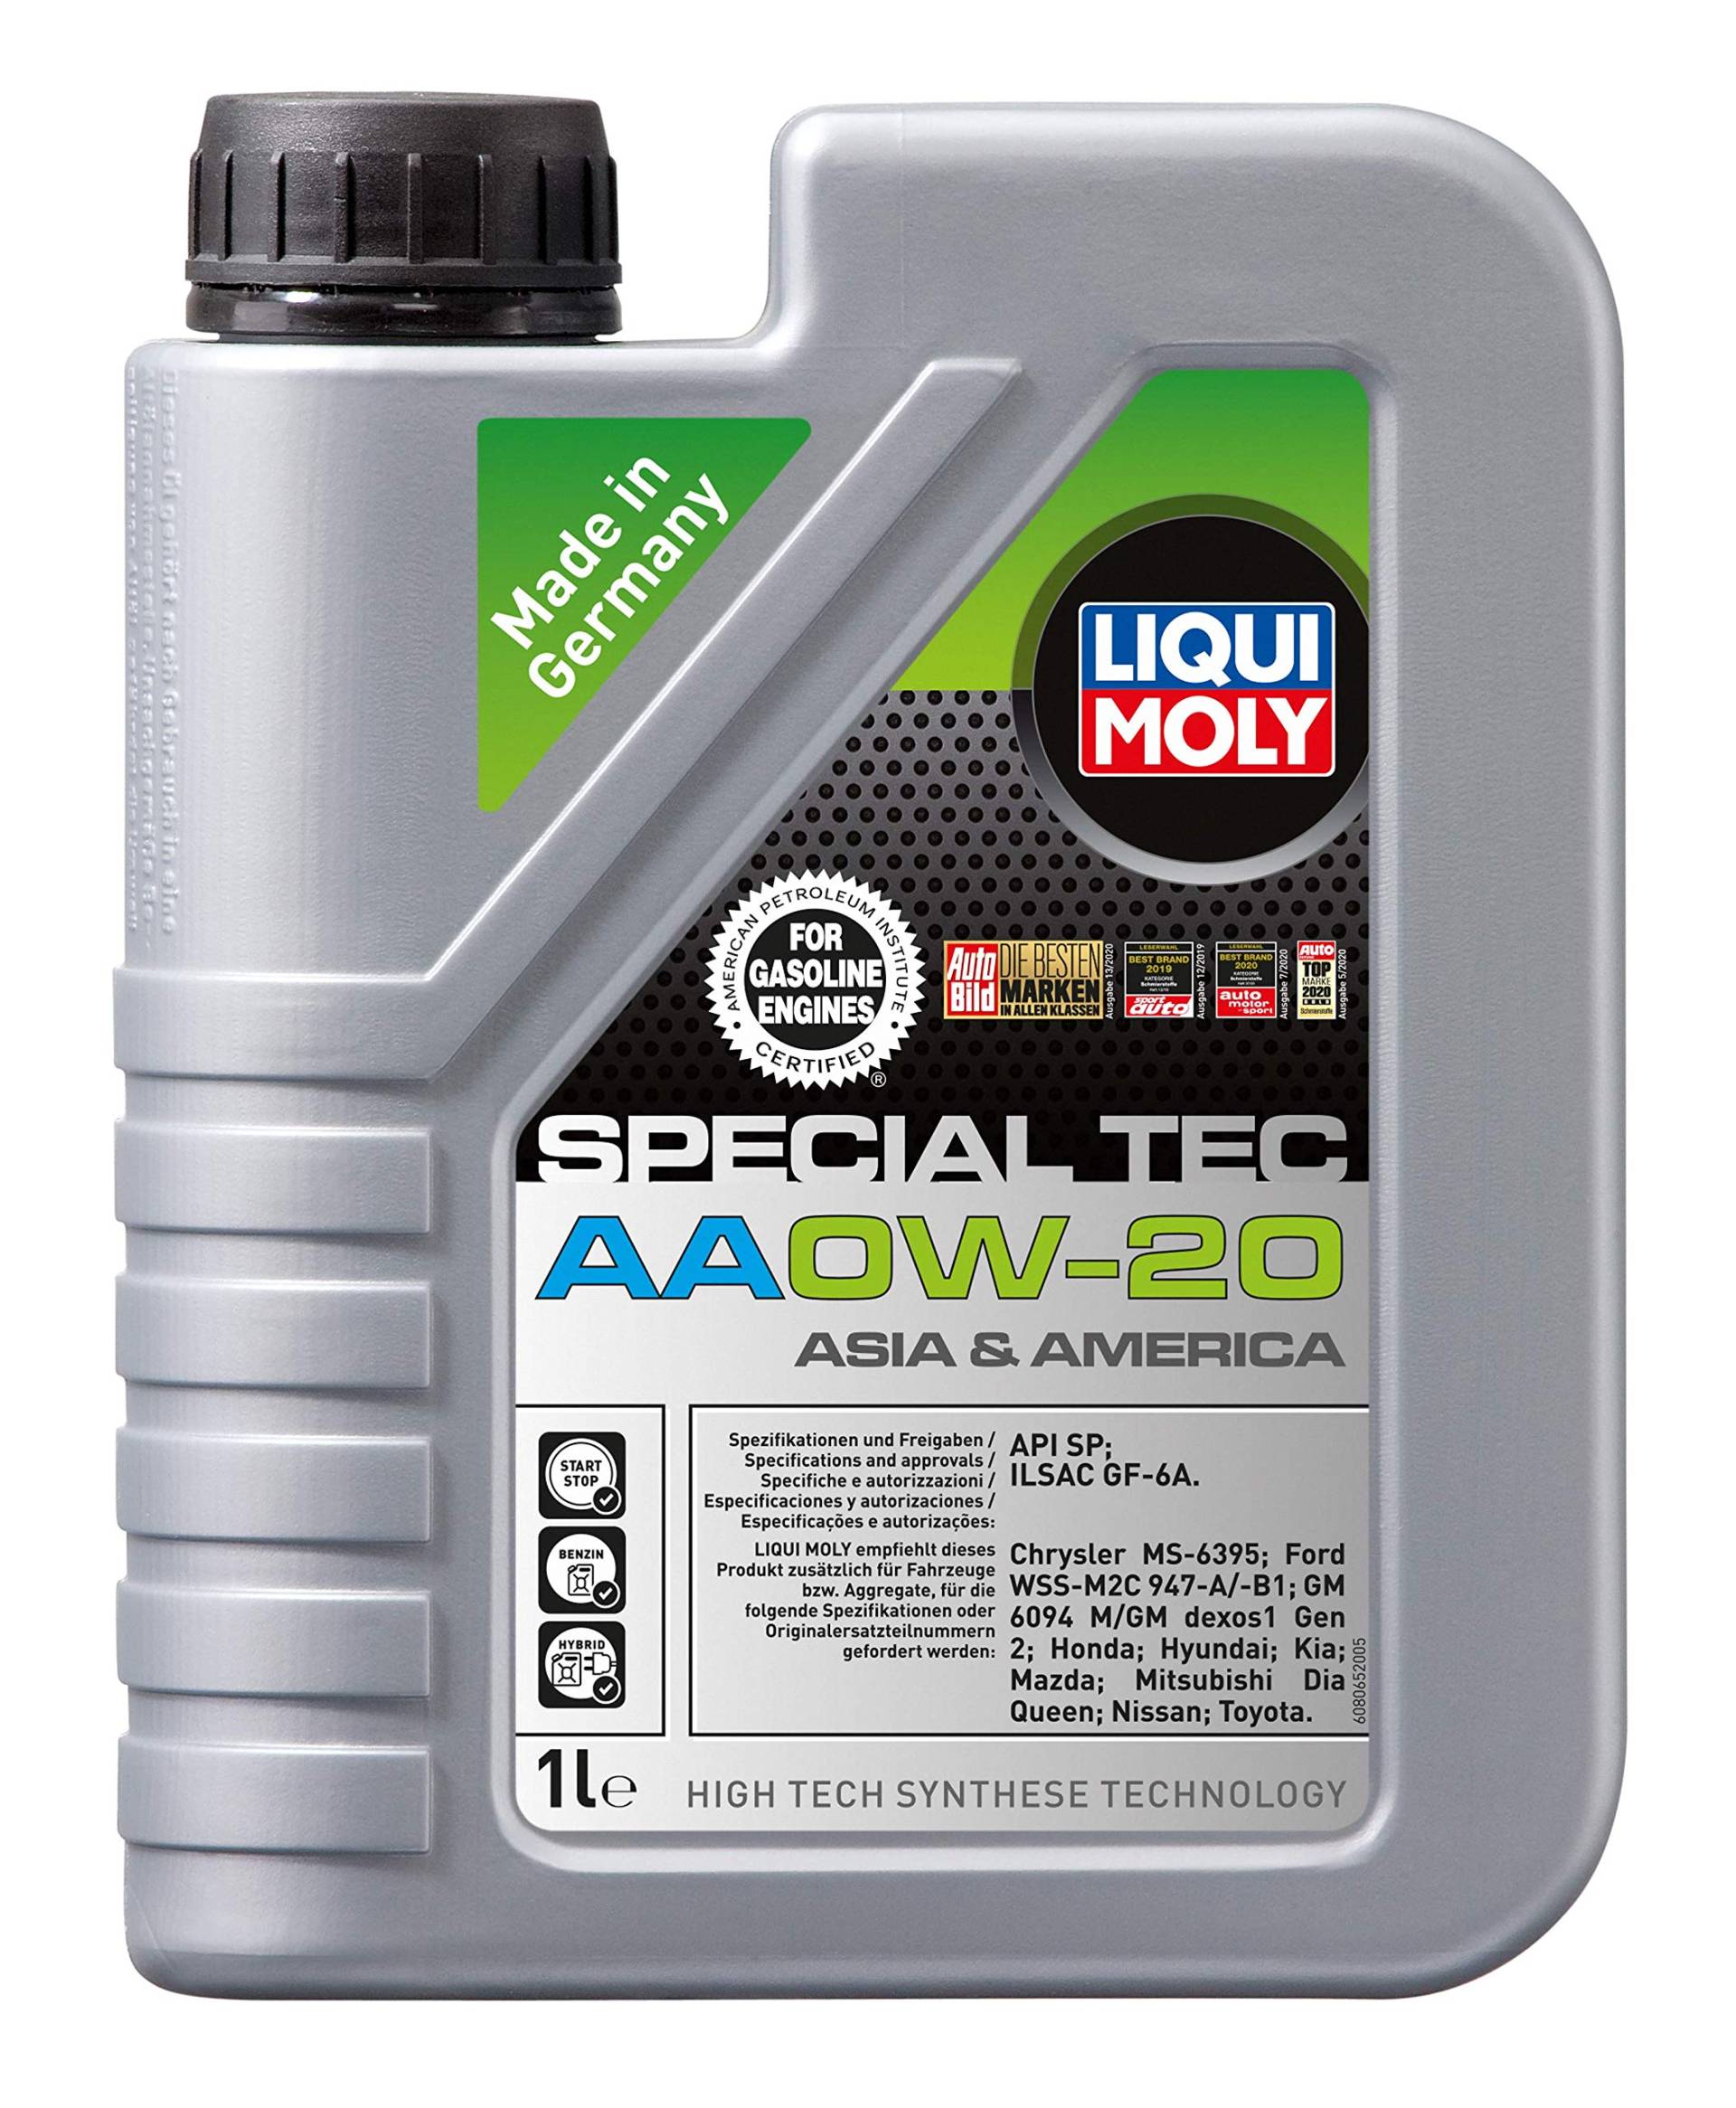 LIQUI MOLY Special Tec AA 0W-20 | 1 L | Synthesetechnologie Motoröl | Art.-Nr.: 9701 von Liqui Moly